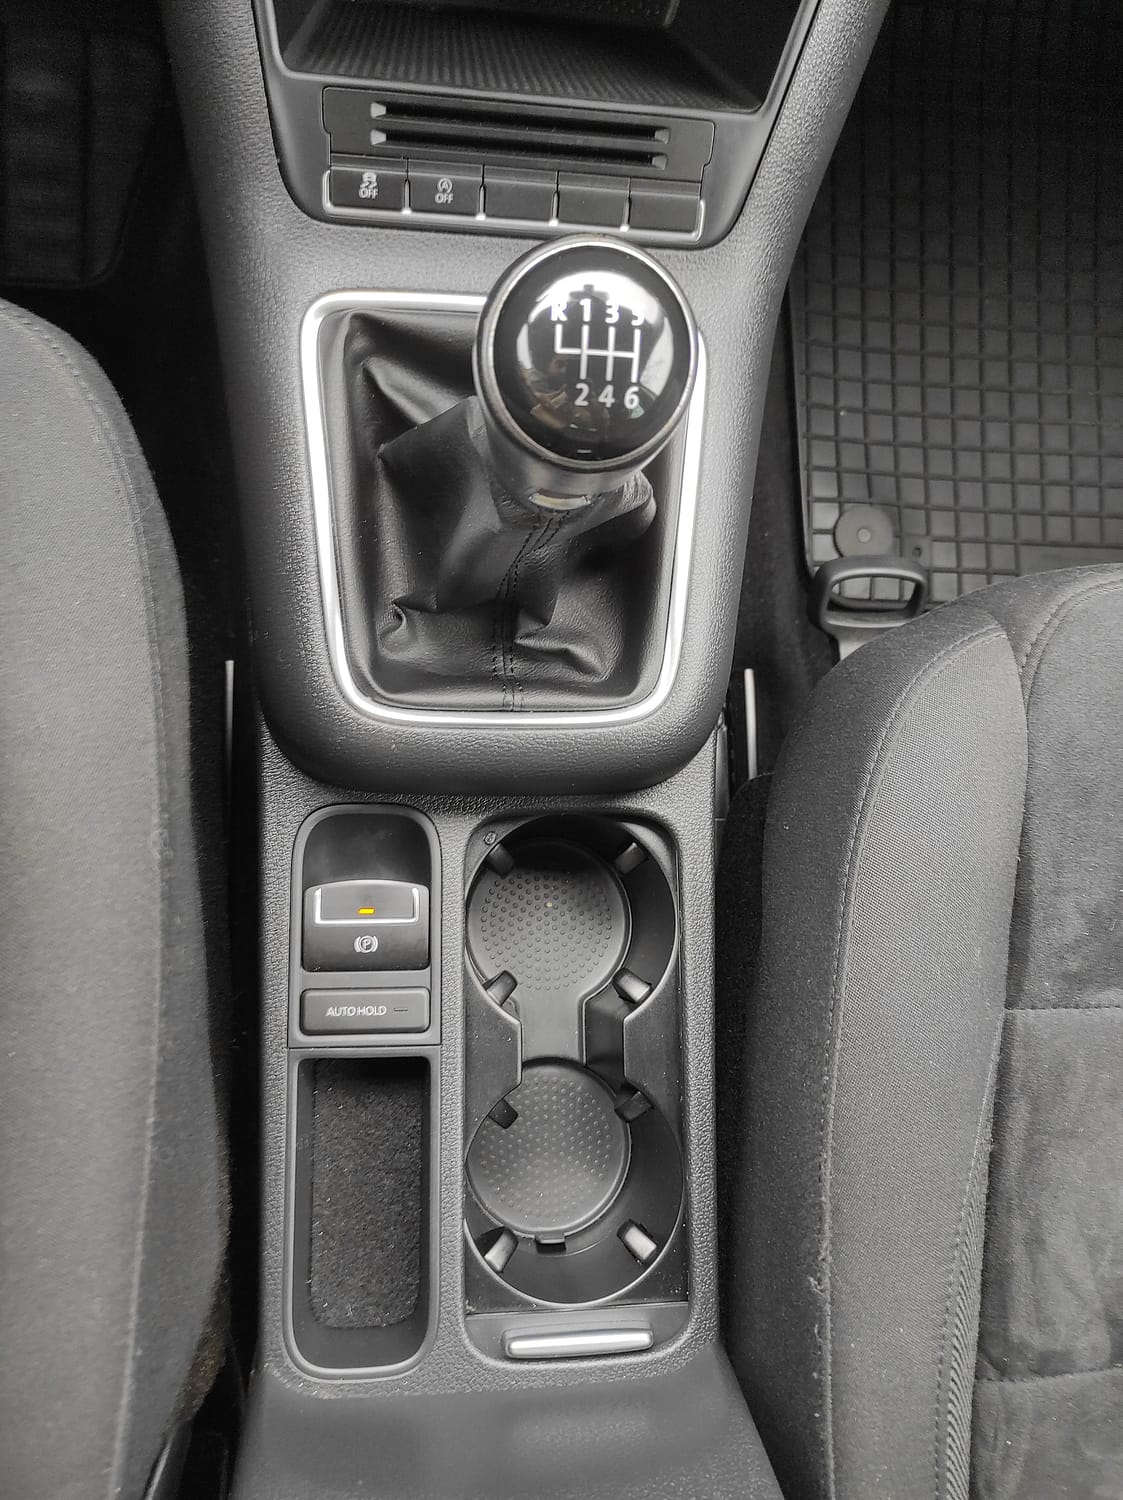 Volkswagen Tiguan 2.0 TDI 140ch BlueMotion Technology Sportline - Automatix Motors - Voiture Occasion - Achat Voiture - Vente Voiture - Reprise Voiture